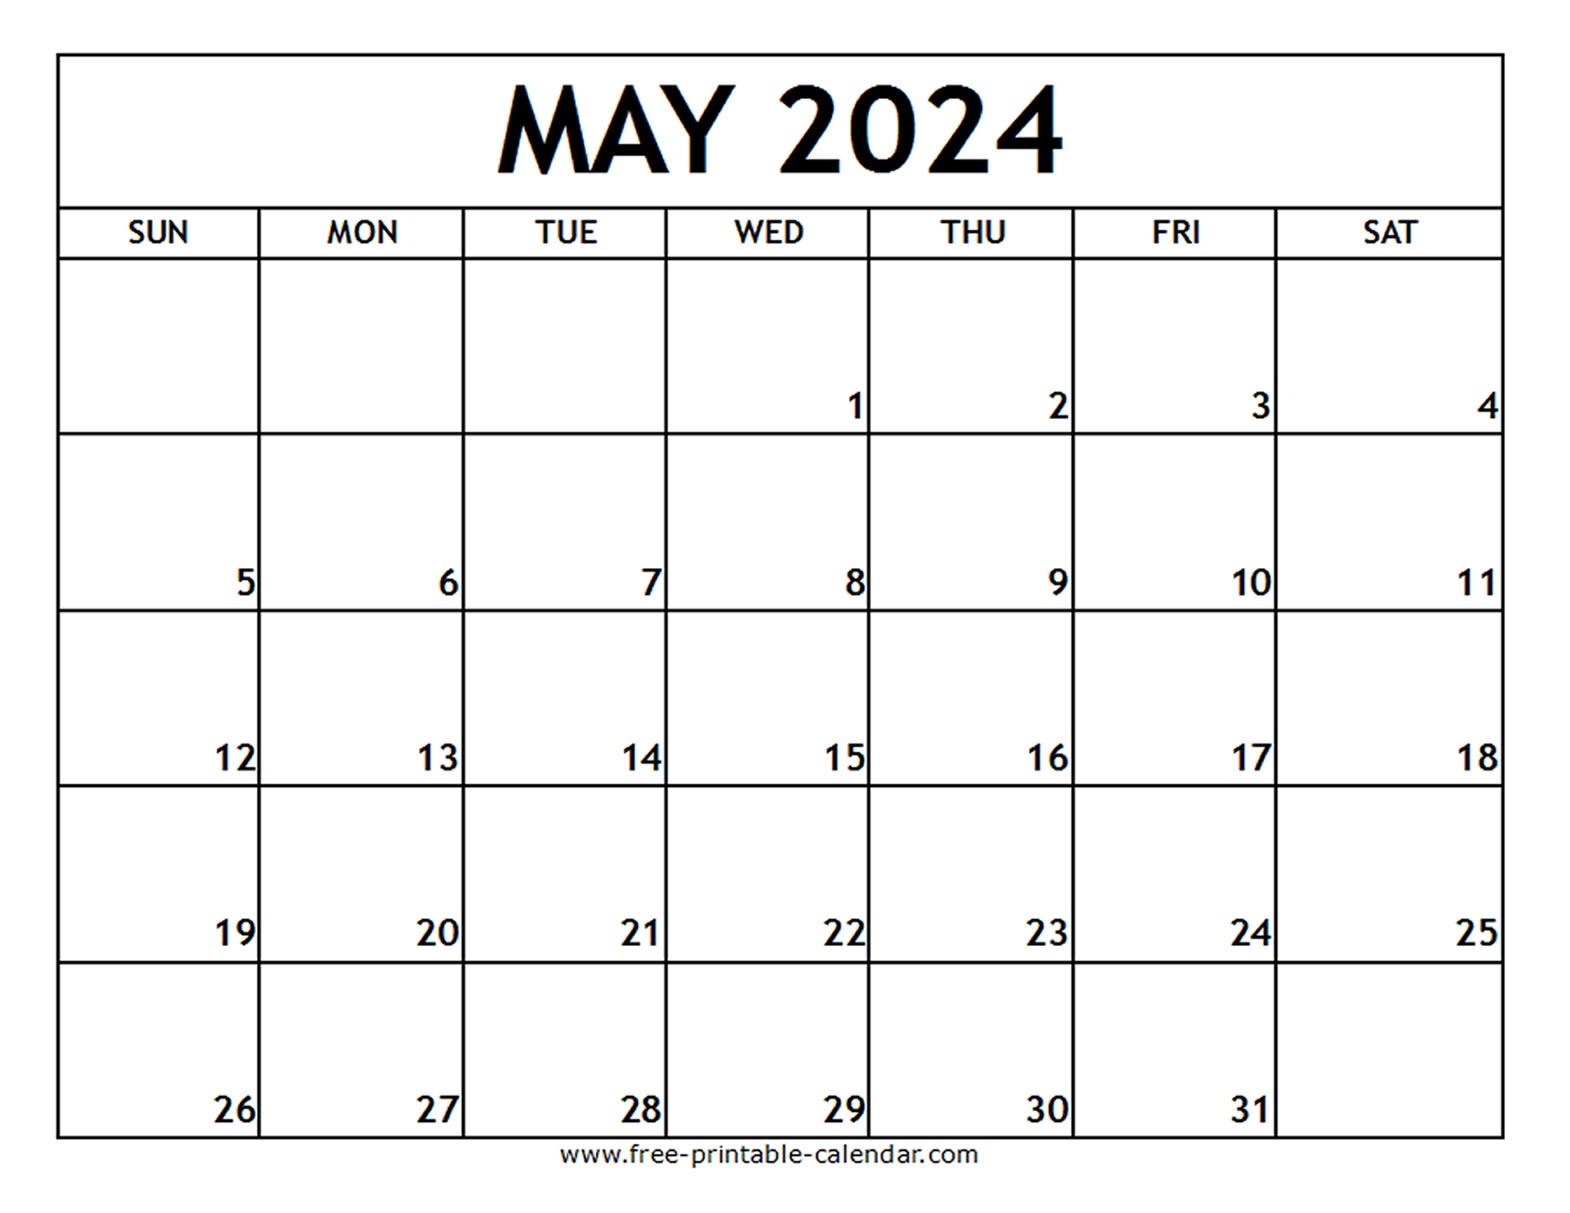 May 2024 Printable Calendar - Free-Printable-Calendar with Free Printable Calendar 2024 May Through December